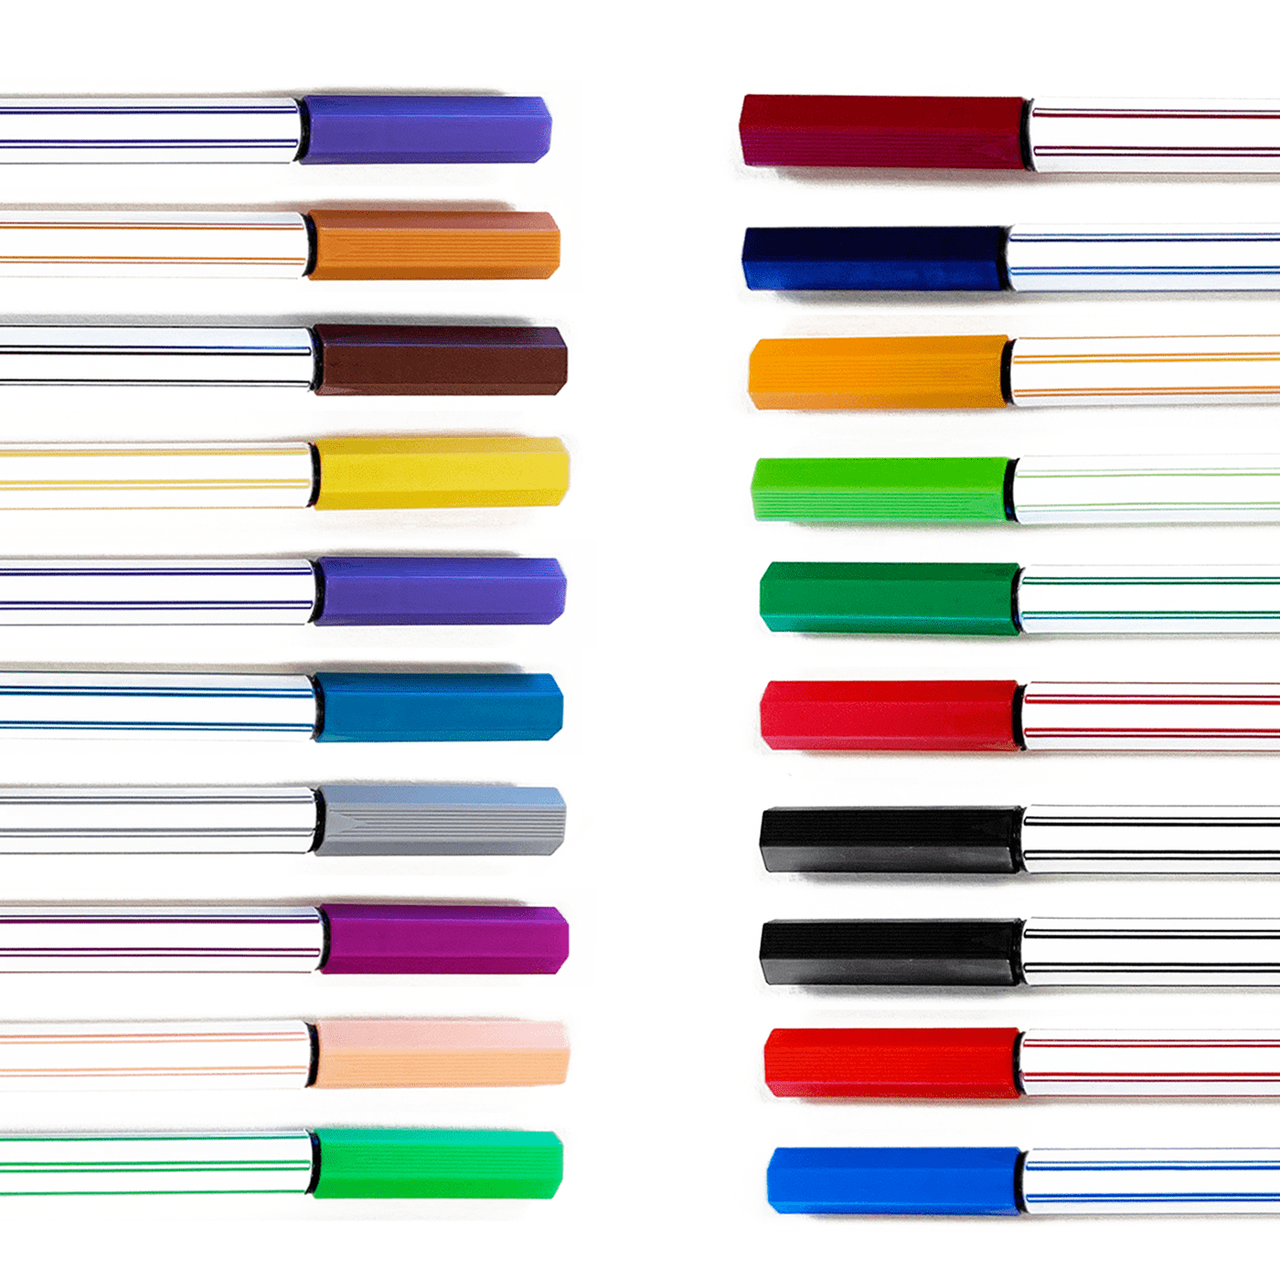 STABILO Pen 68 Brush ColorParade Set, 20-Colors